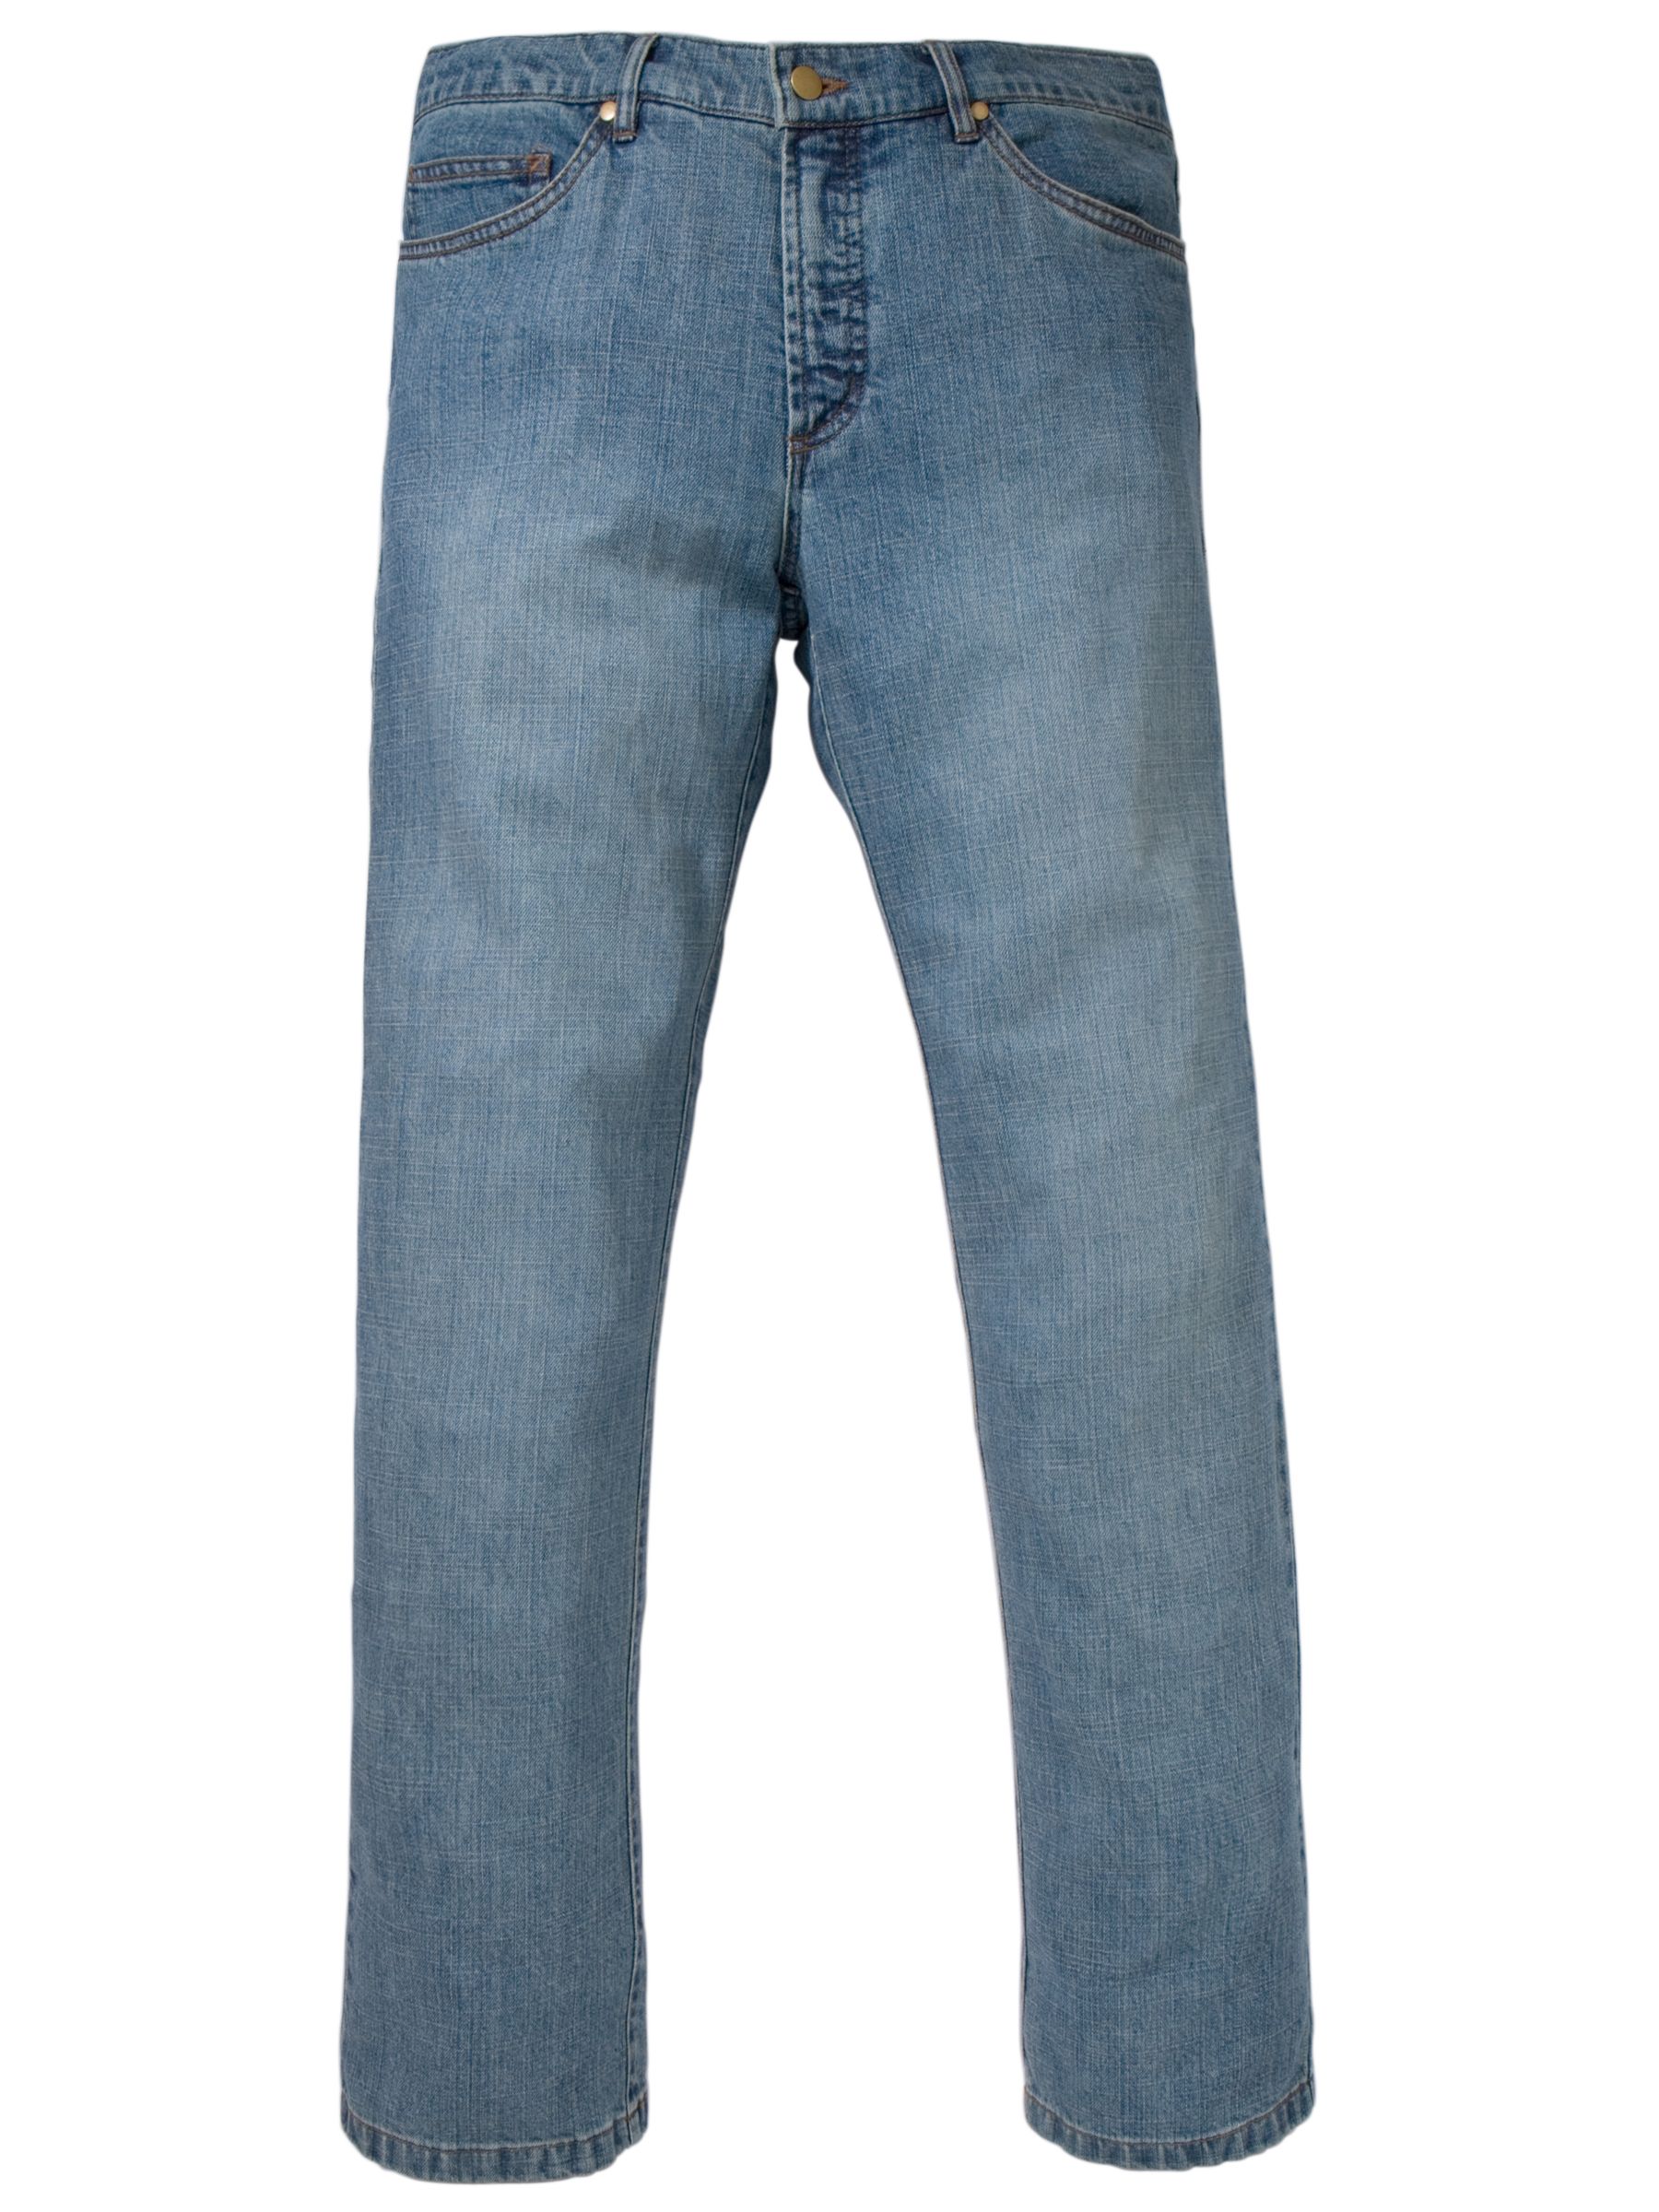 John Lewis Stretch Jeans, Mid Wash, Waist 30R